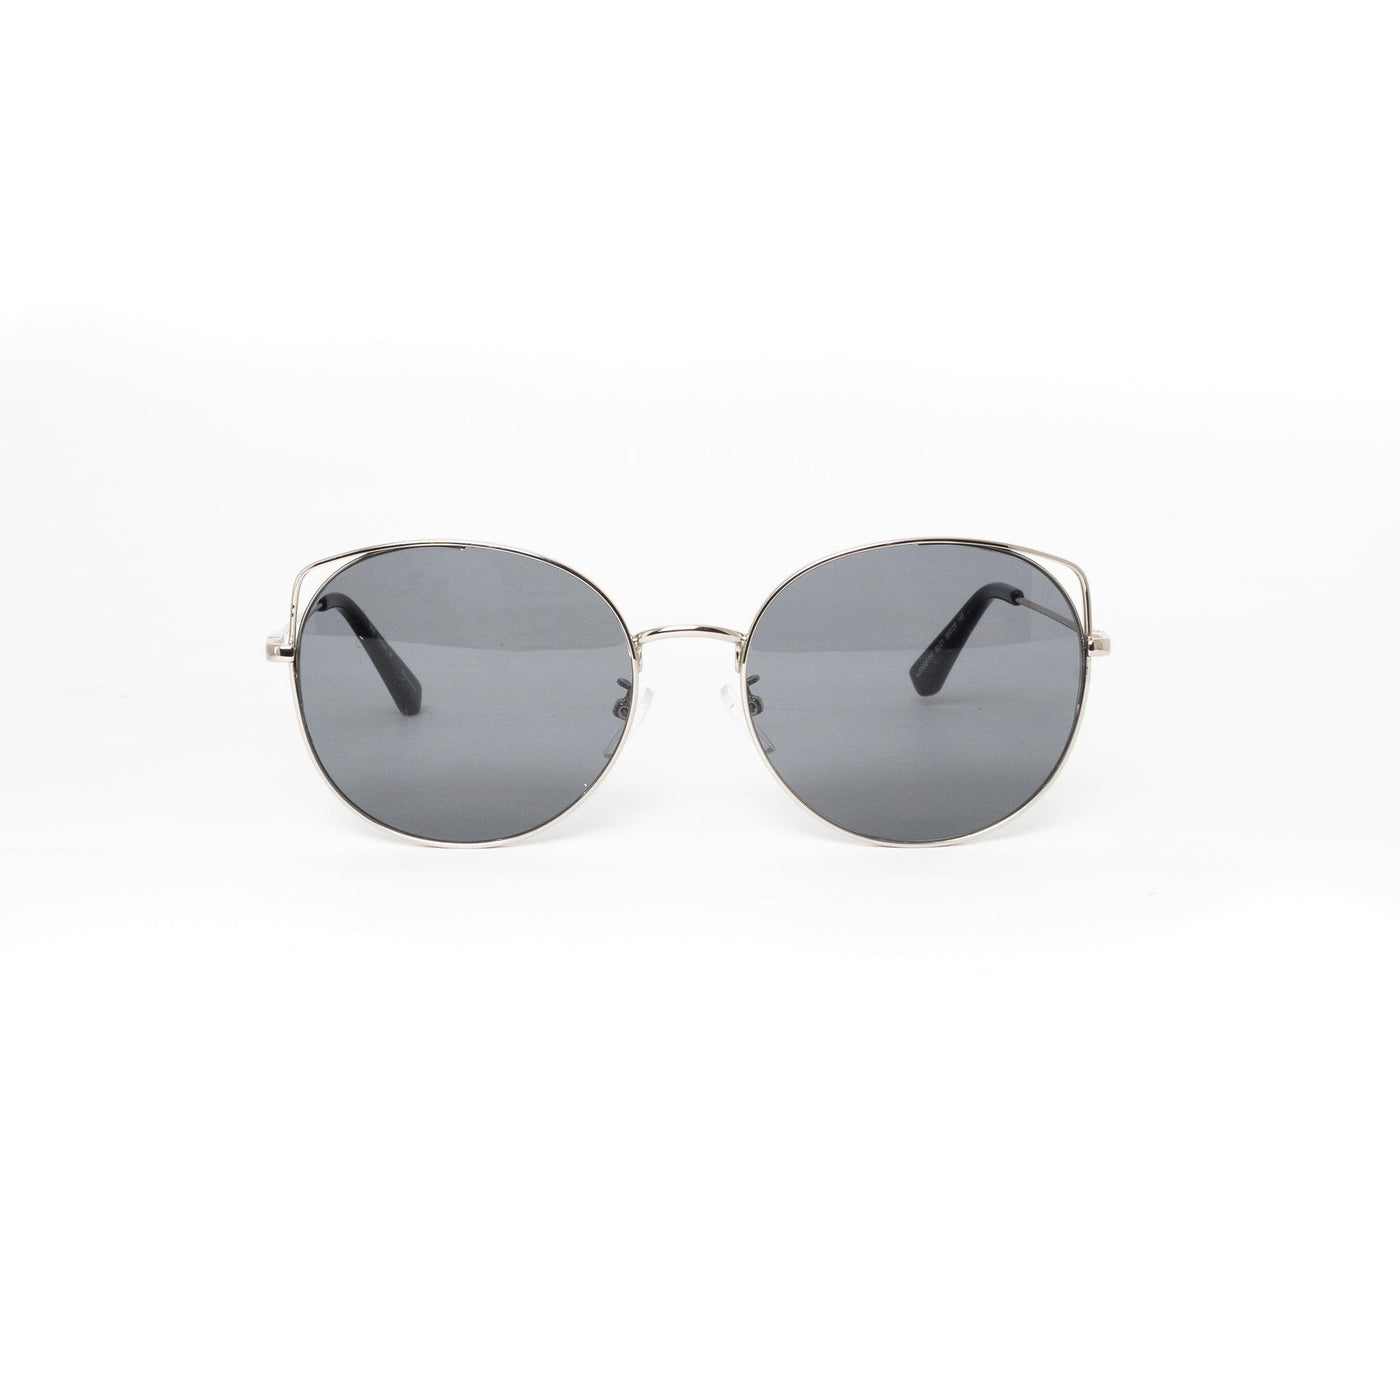 Aojo Sunglasses | AOAJ302SF701SLC1_59 - Vision Express Optical Philippines